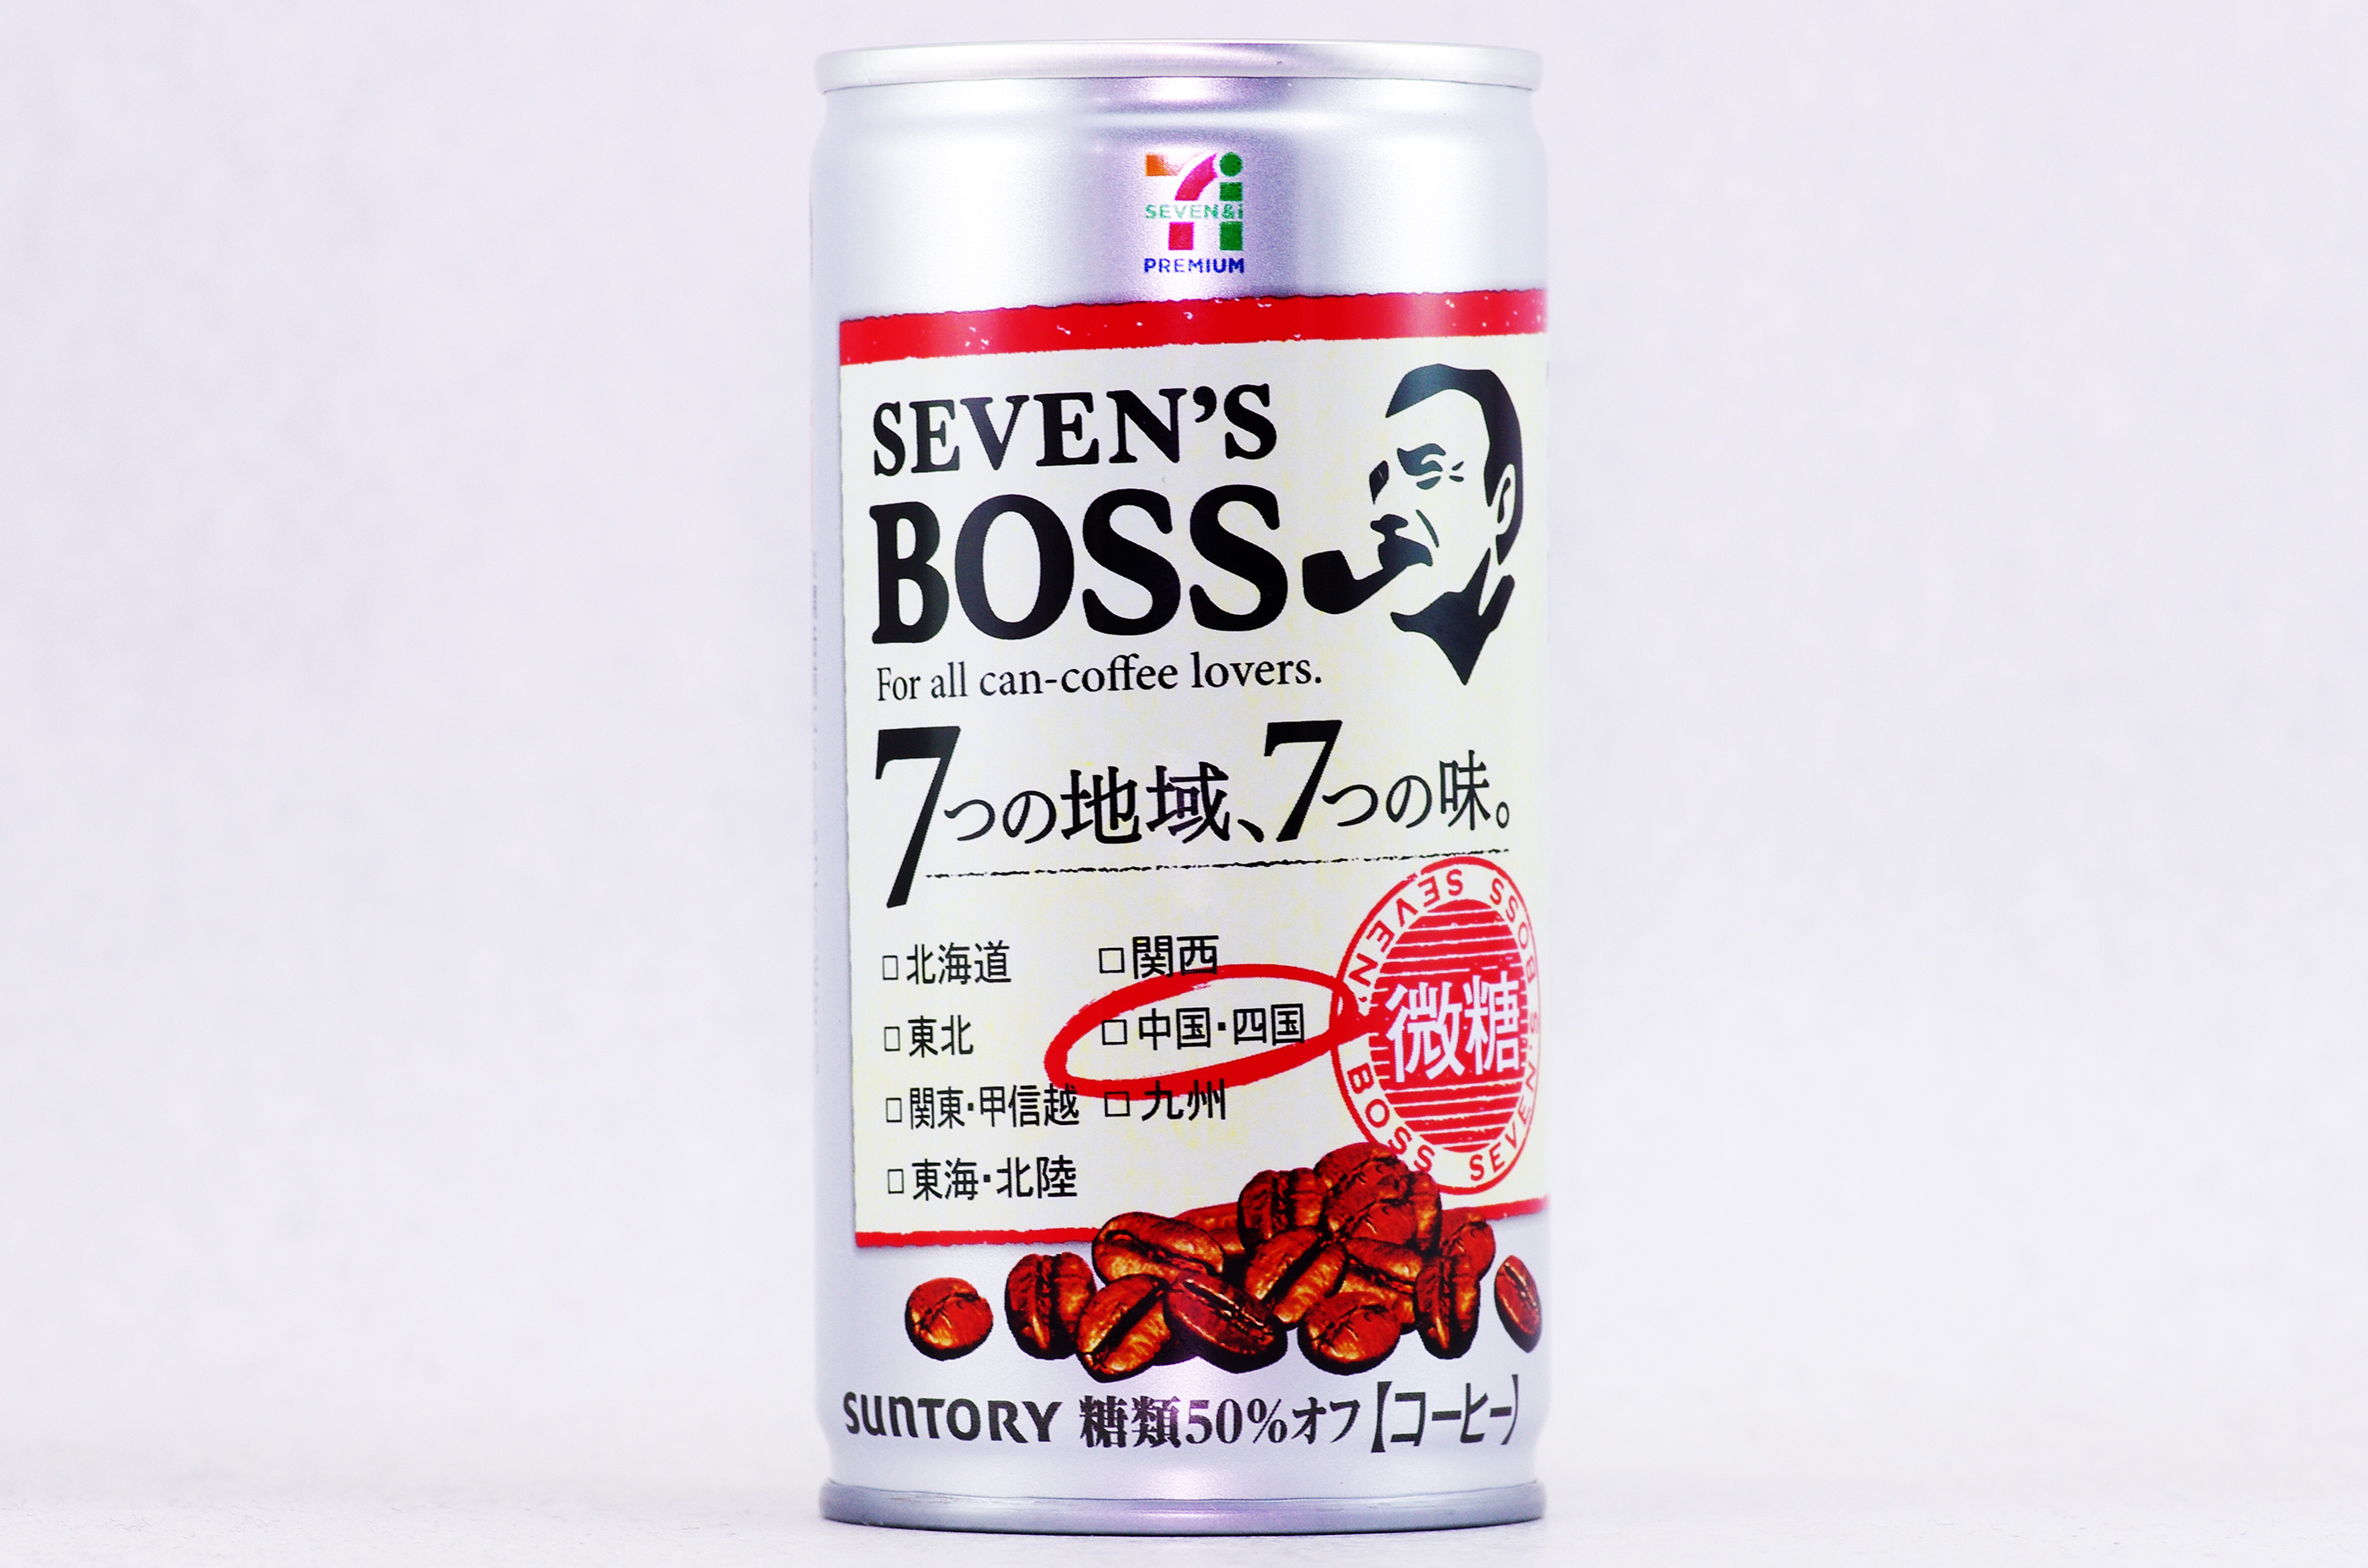 SEVEN'S BOSS 微糖 中国・四国限定 2018年10月